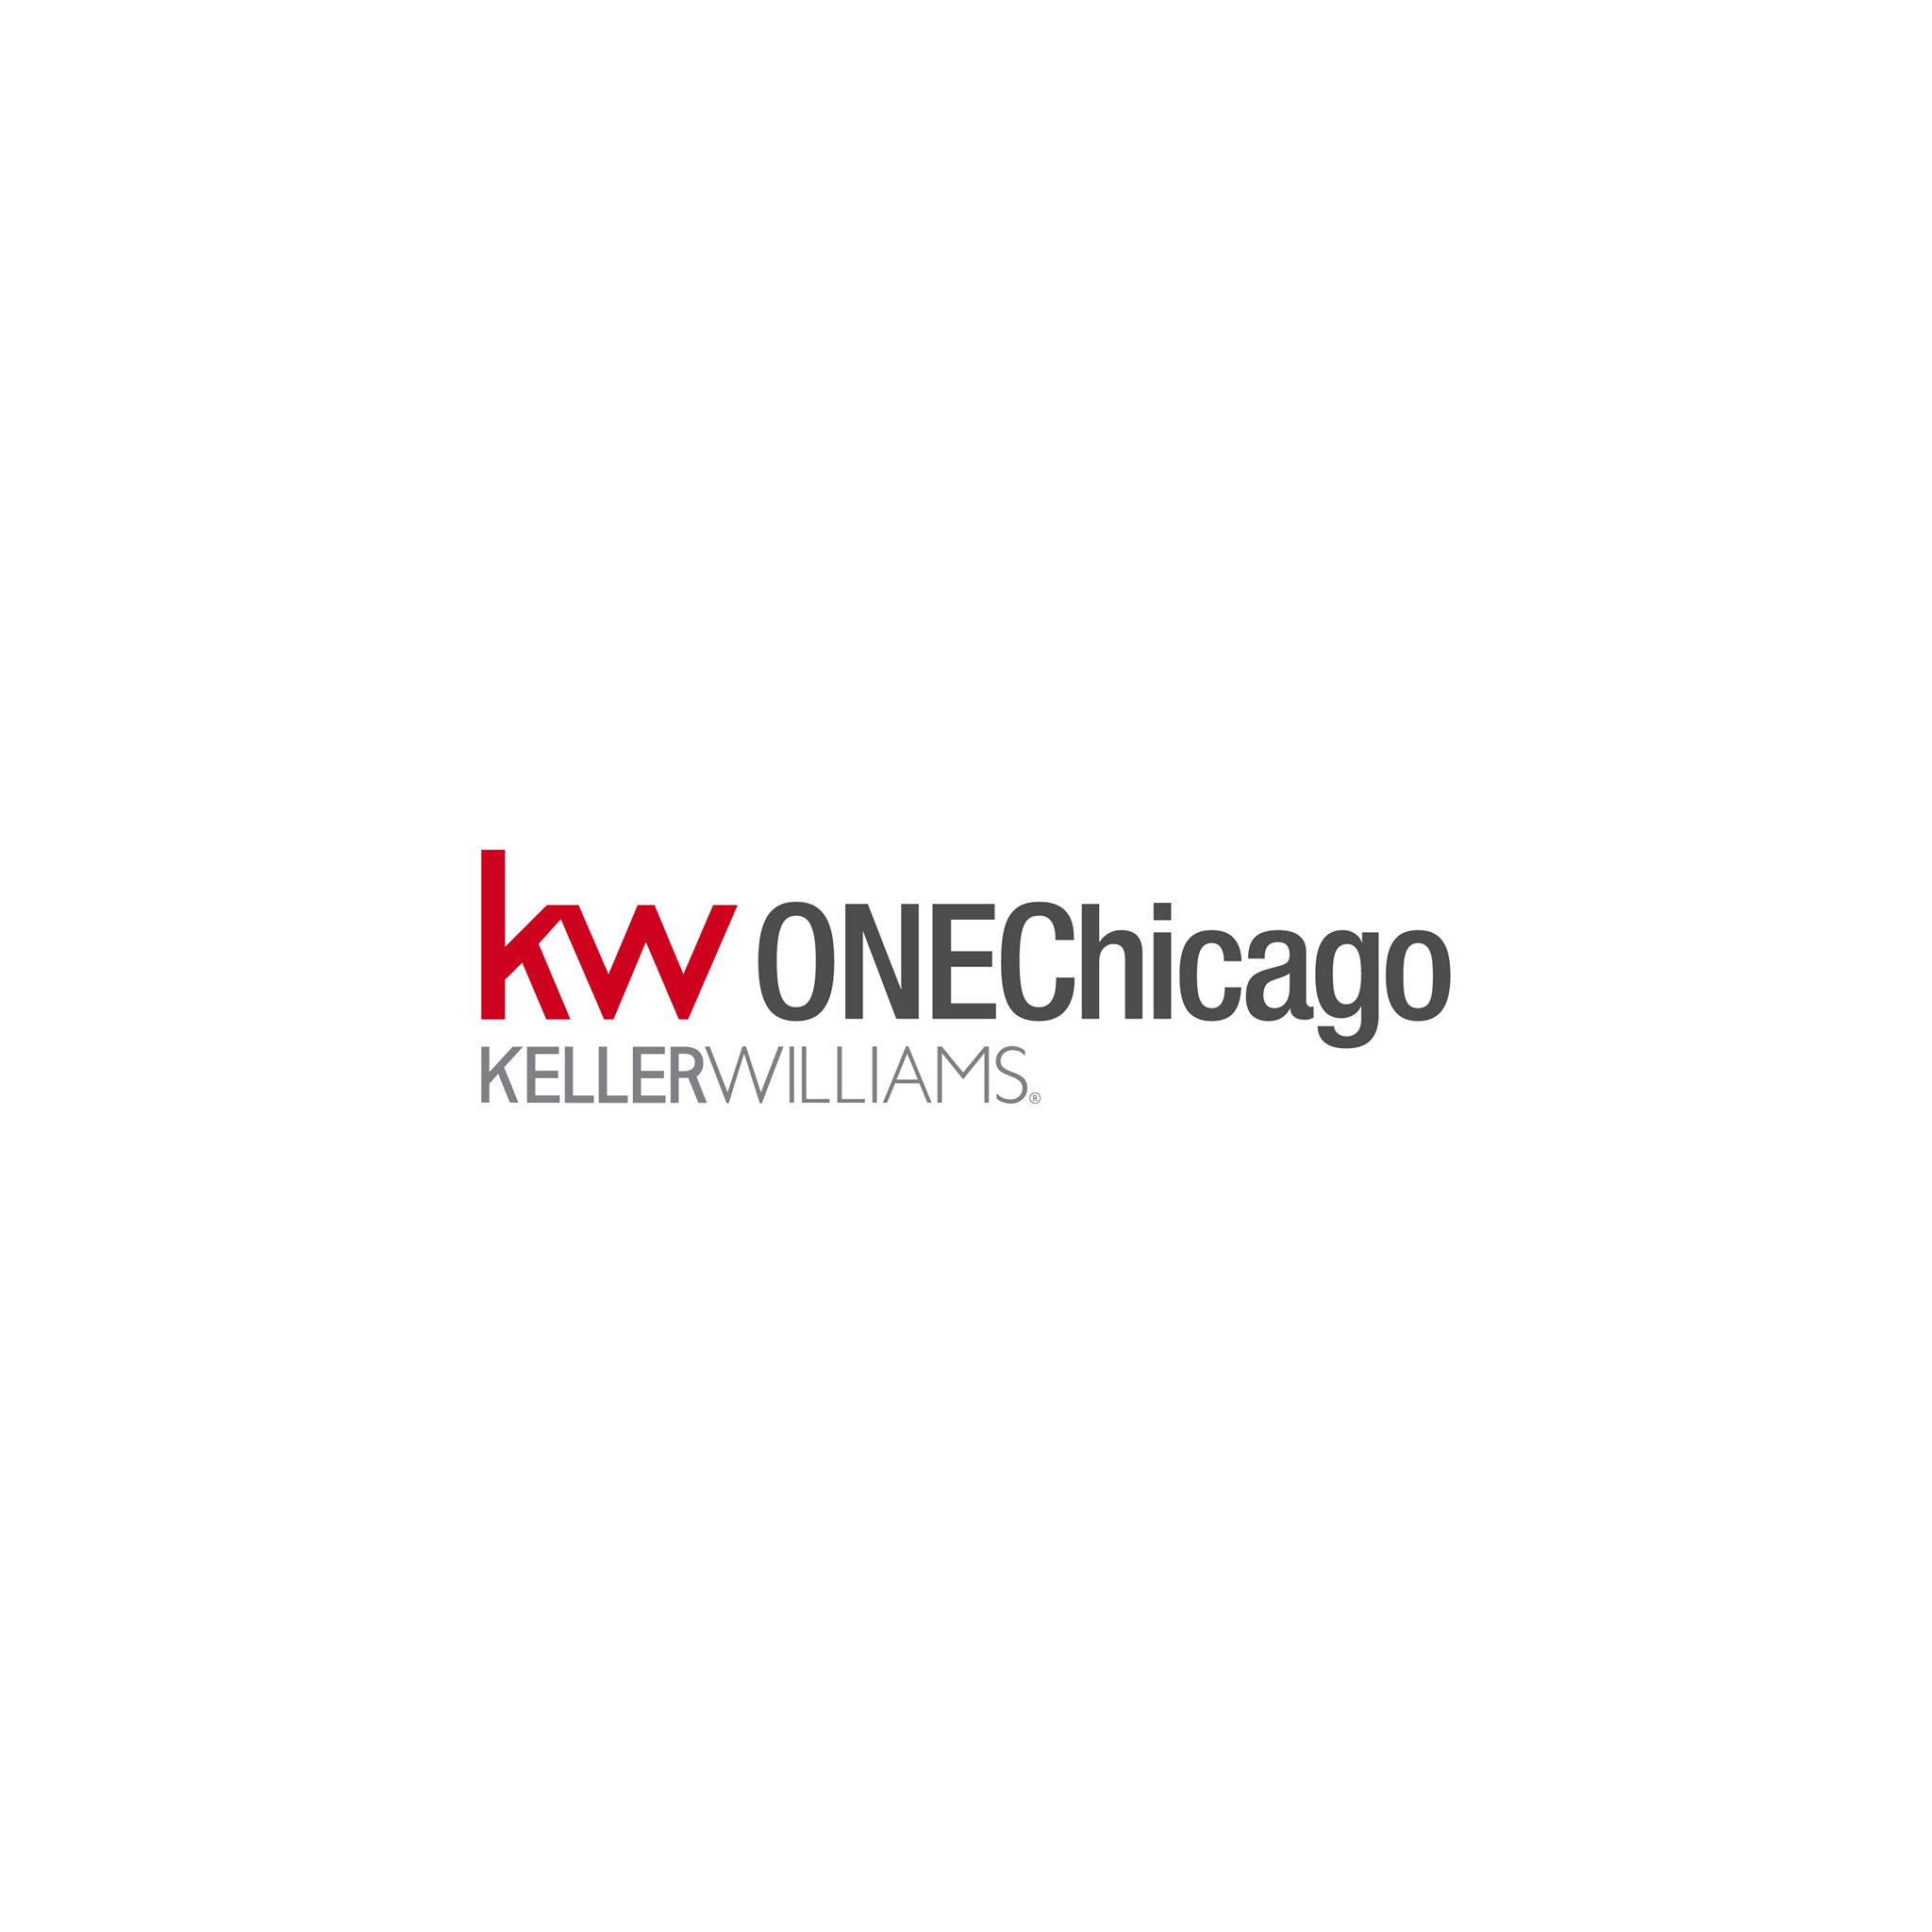 KW One Chicago